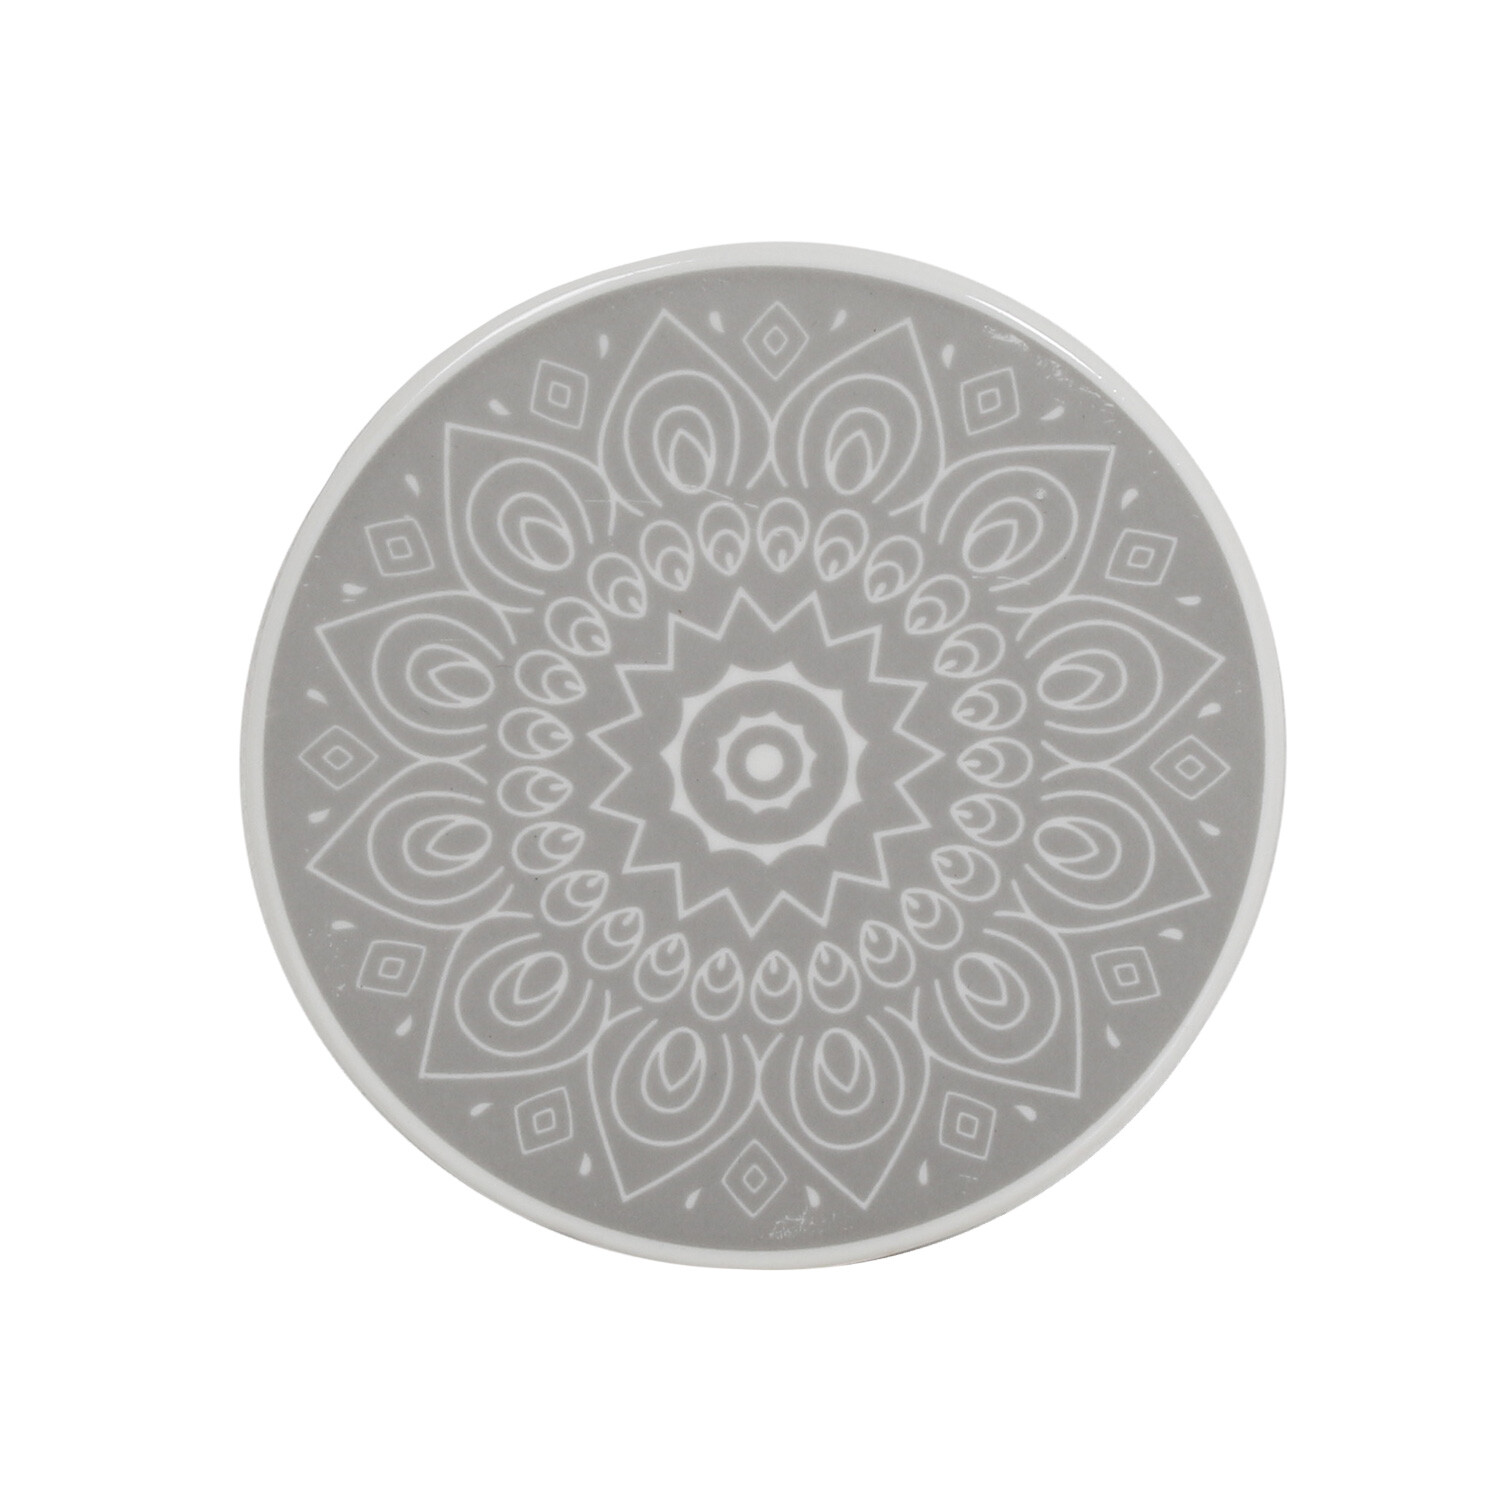 Single Marrakesh Ceramic Coaster in Assorted styles Image 1